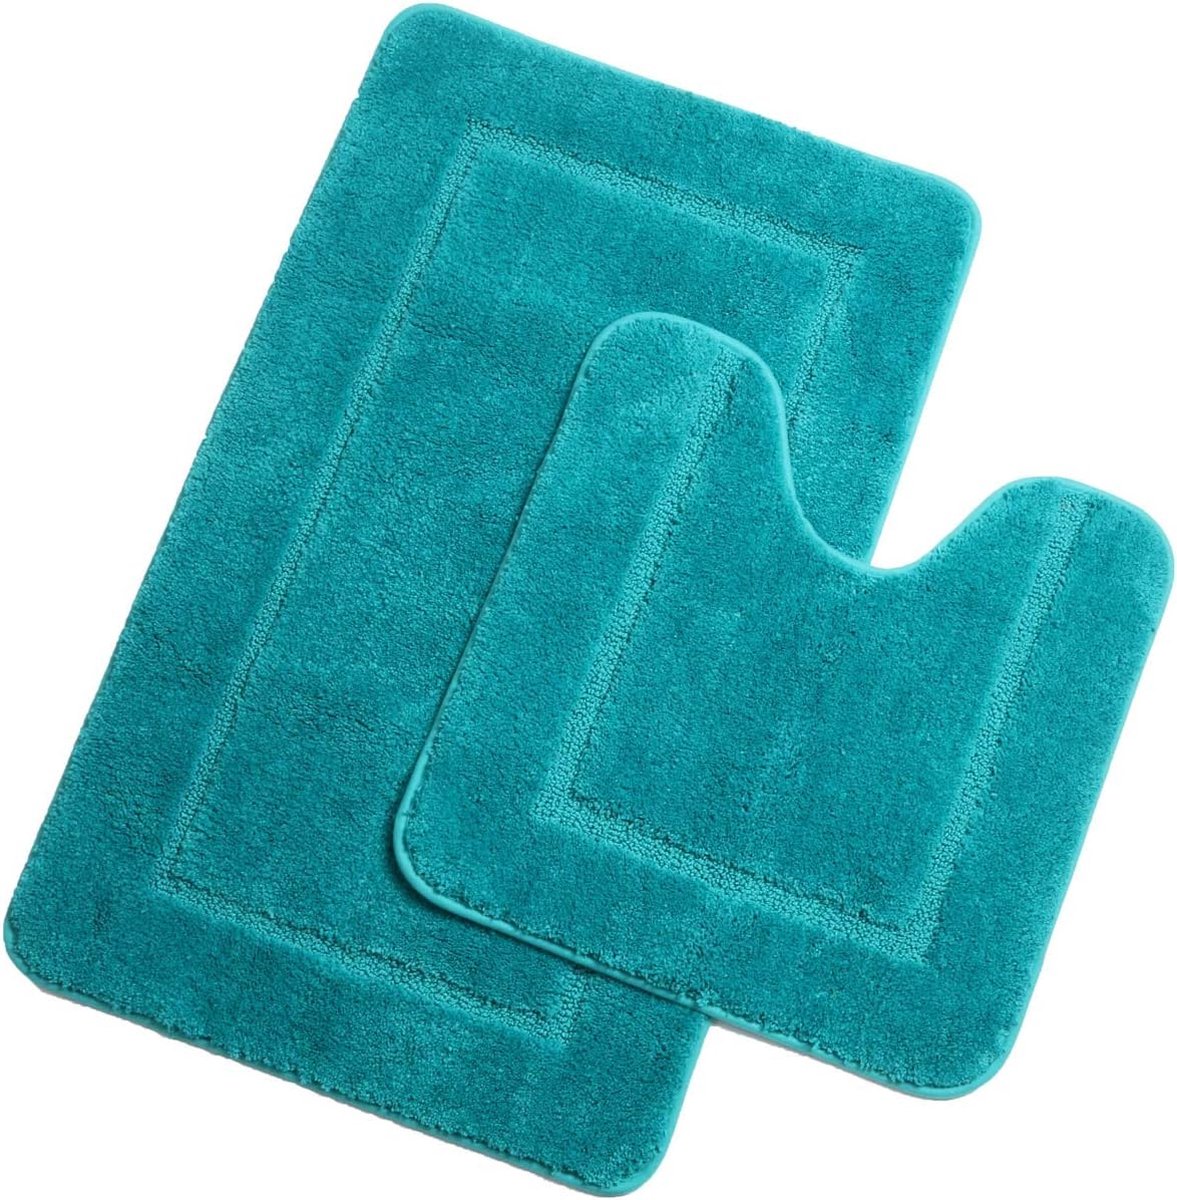 Microvezelbadmattenset, 2-delige antislip wasbare badmat en toiletmat, absorberende badkamertapijtset (turkoois, 53 x 86 cm + 50 x 50 cm)